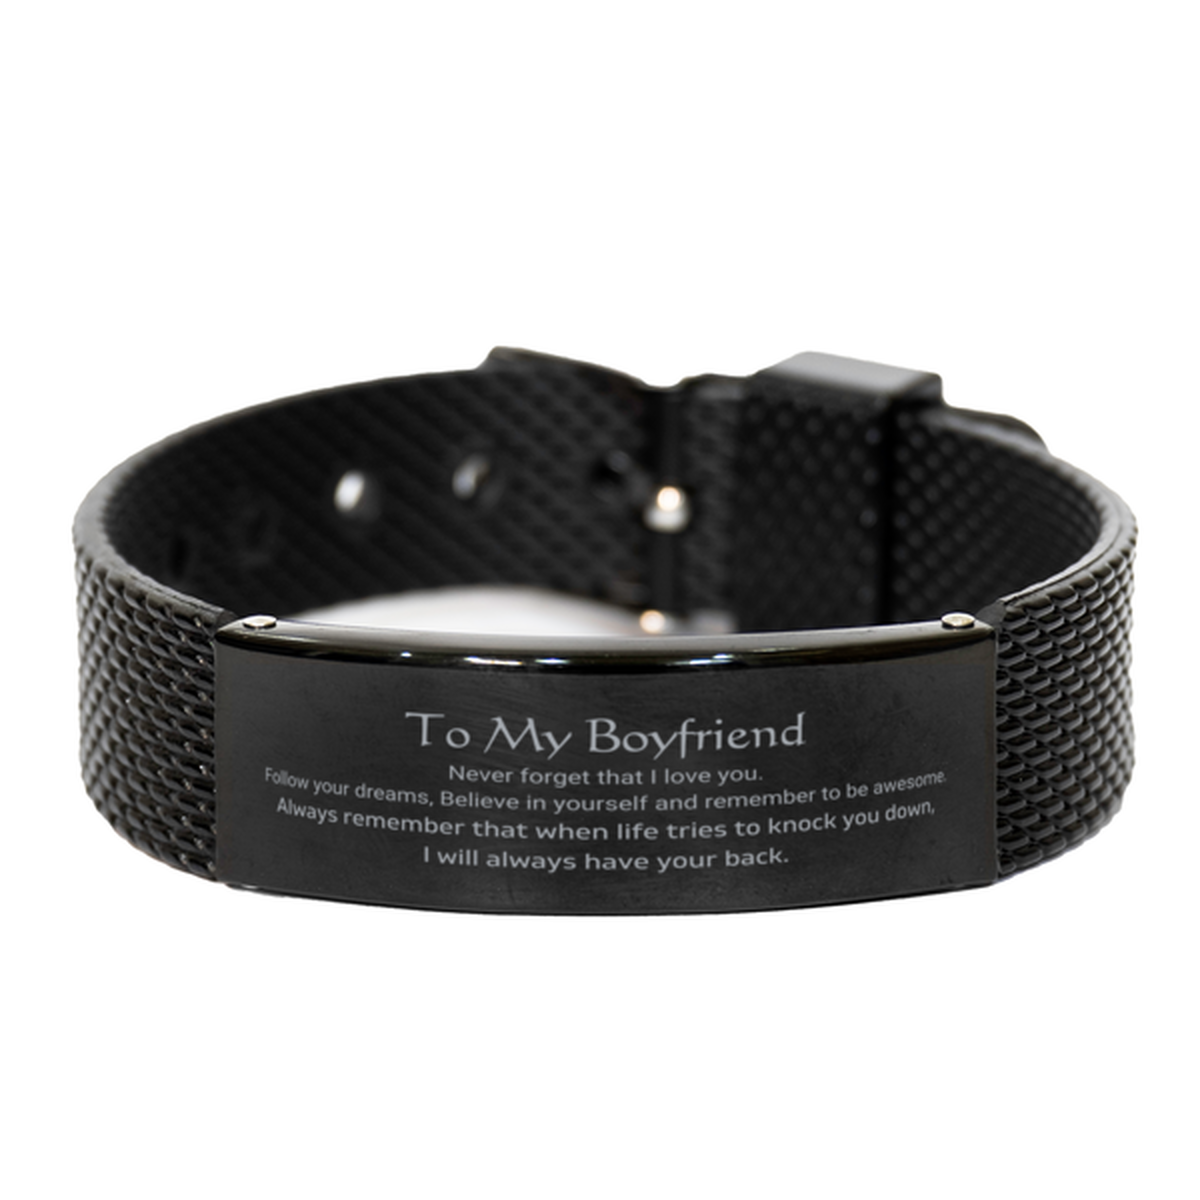 Inspirational Gifts for Boyfriend, Follow your dreams, Believe in yourself, Boyfriend Black Shark Mesh Bracelet, Birthday Christmas Unique Gifts For Boyfriend